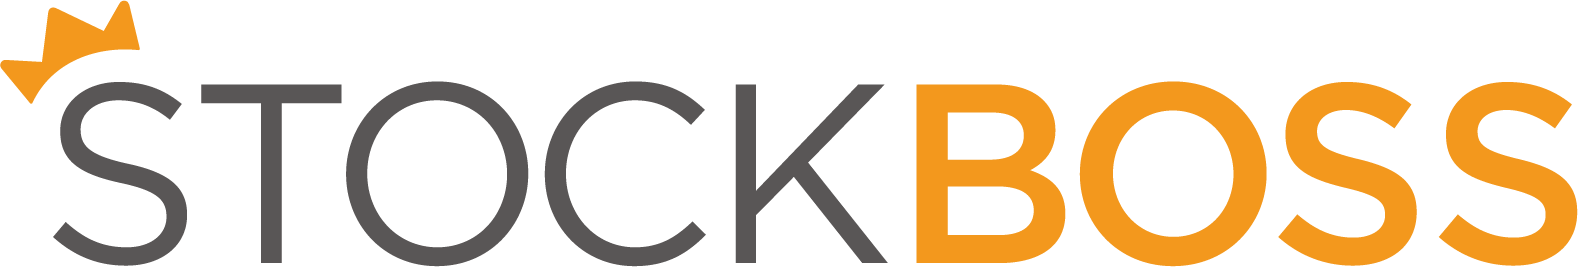 stockboss-logo